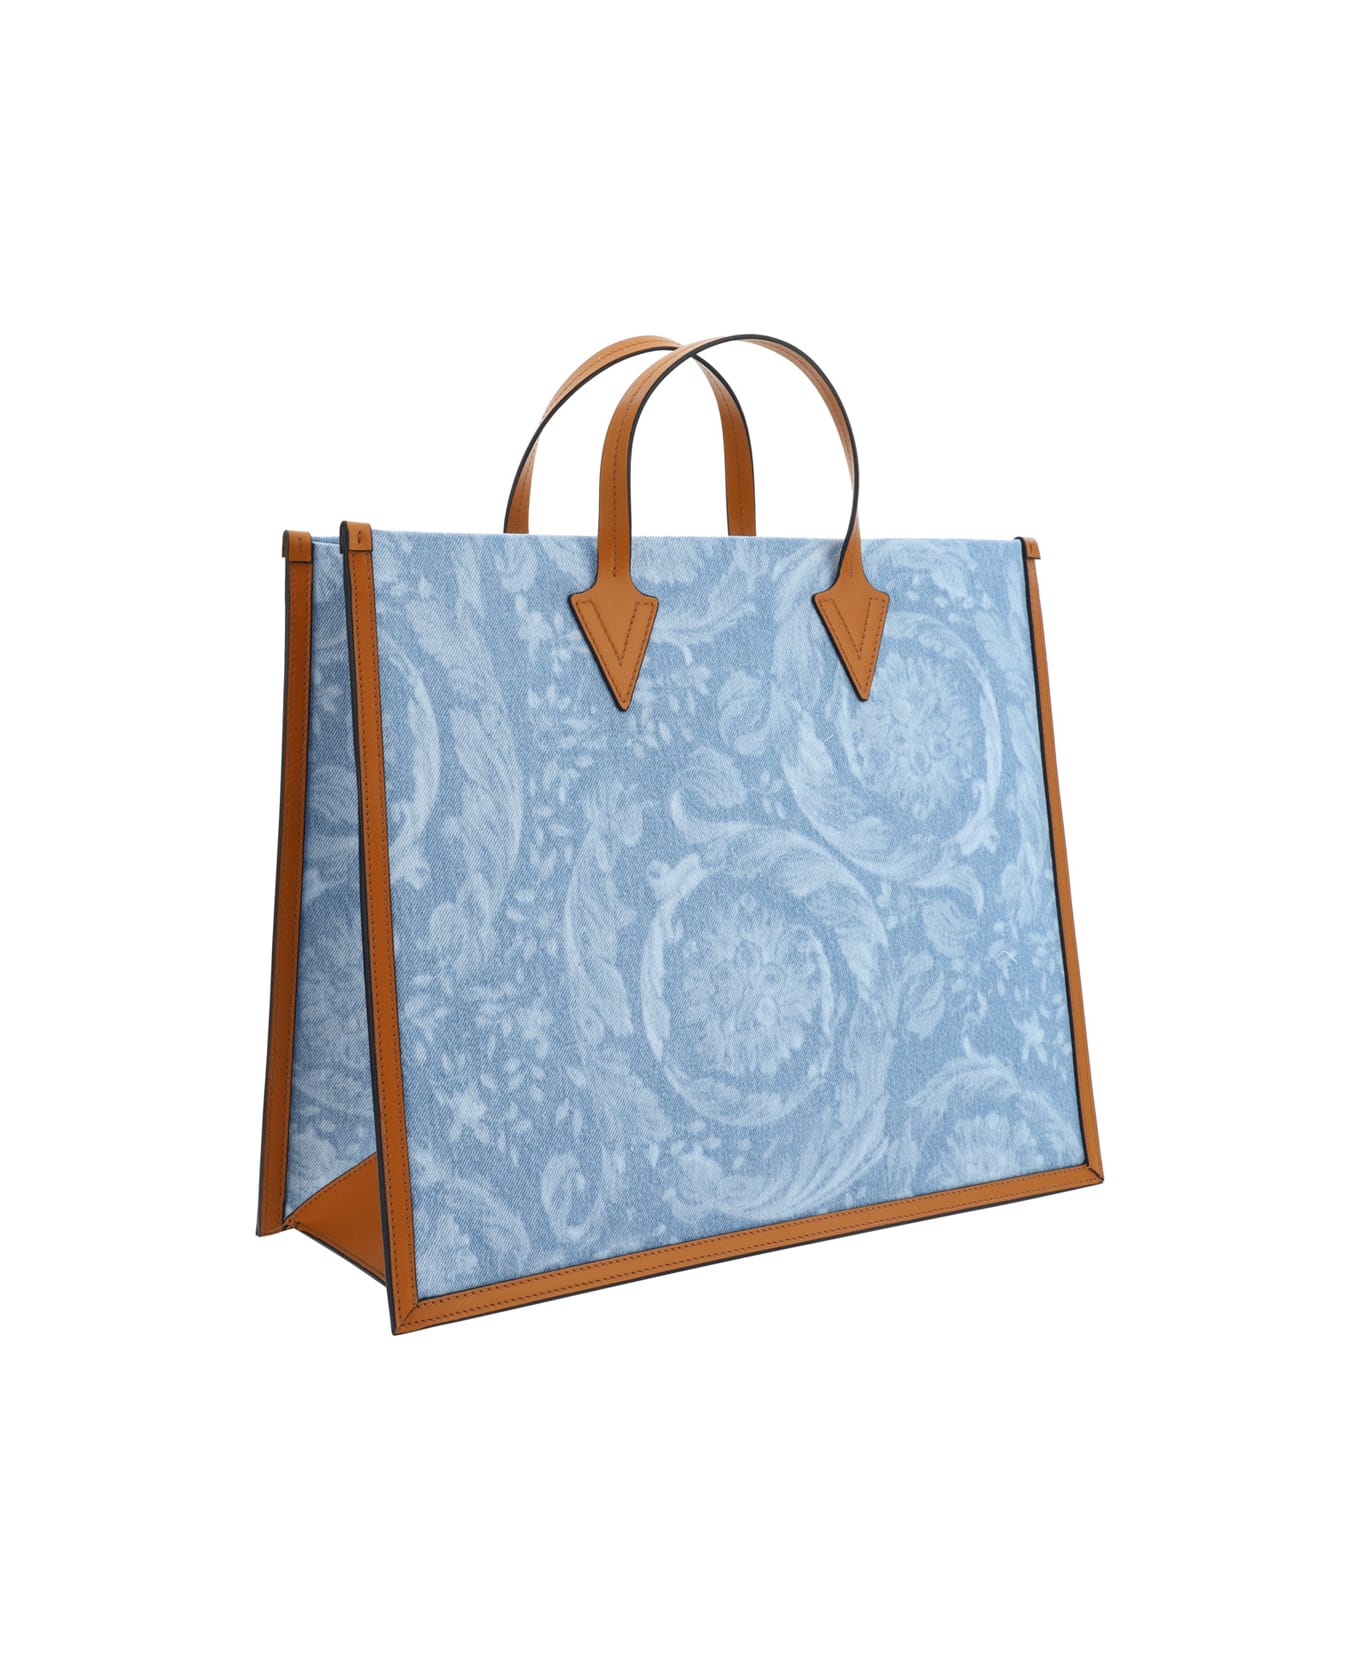 Versace Shopping Bag - Blue